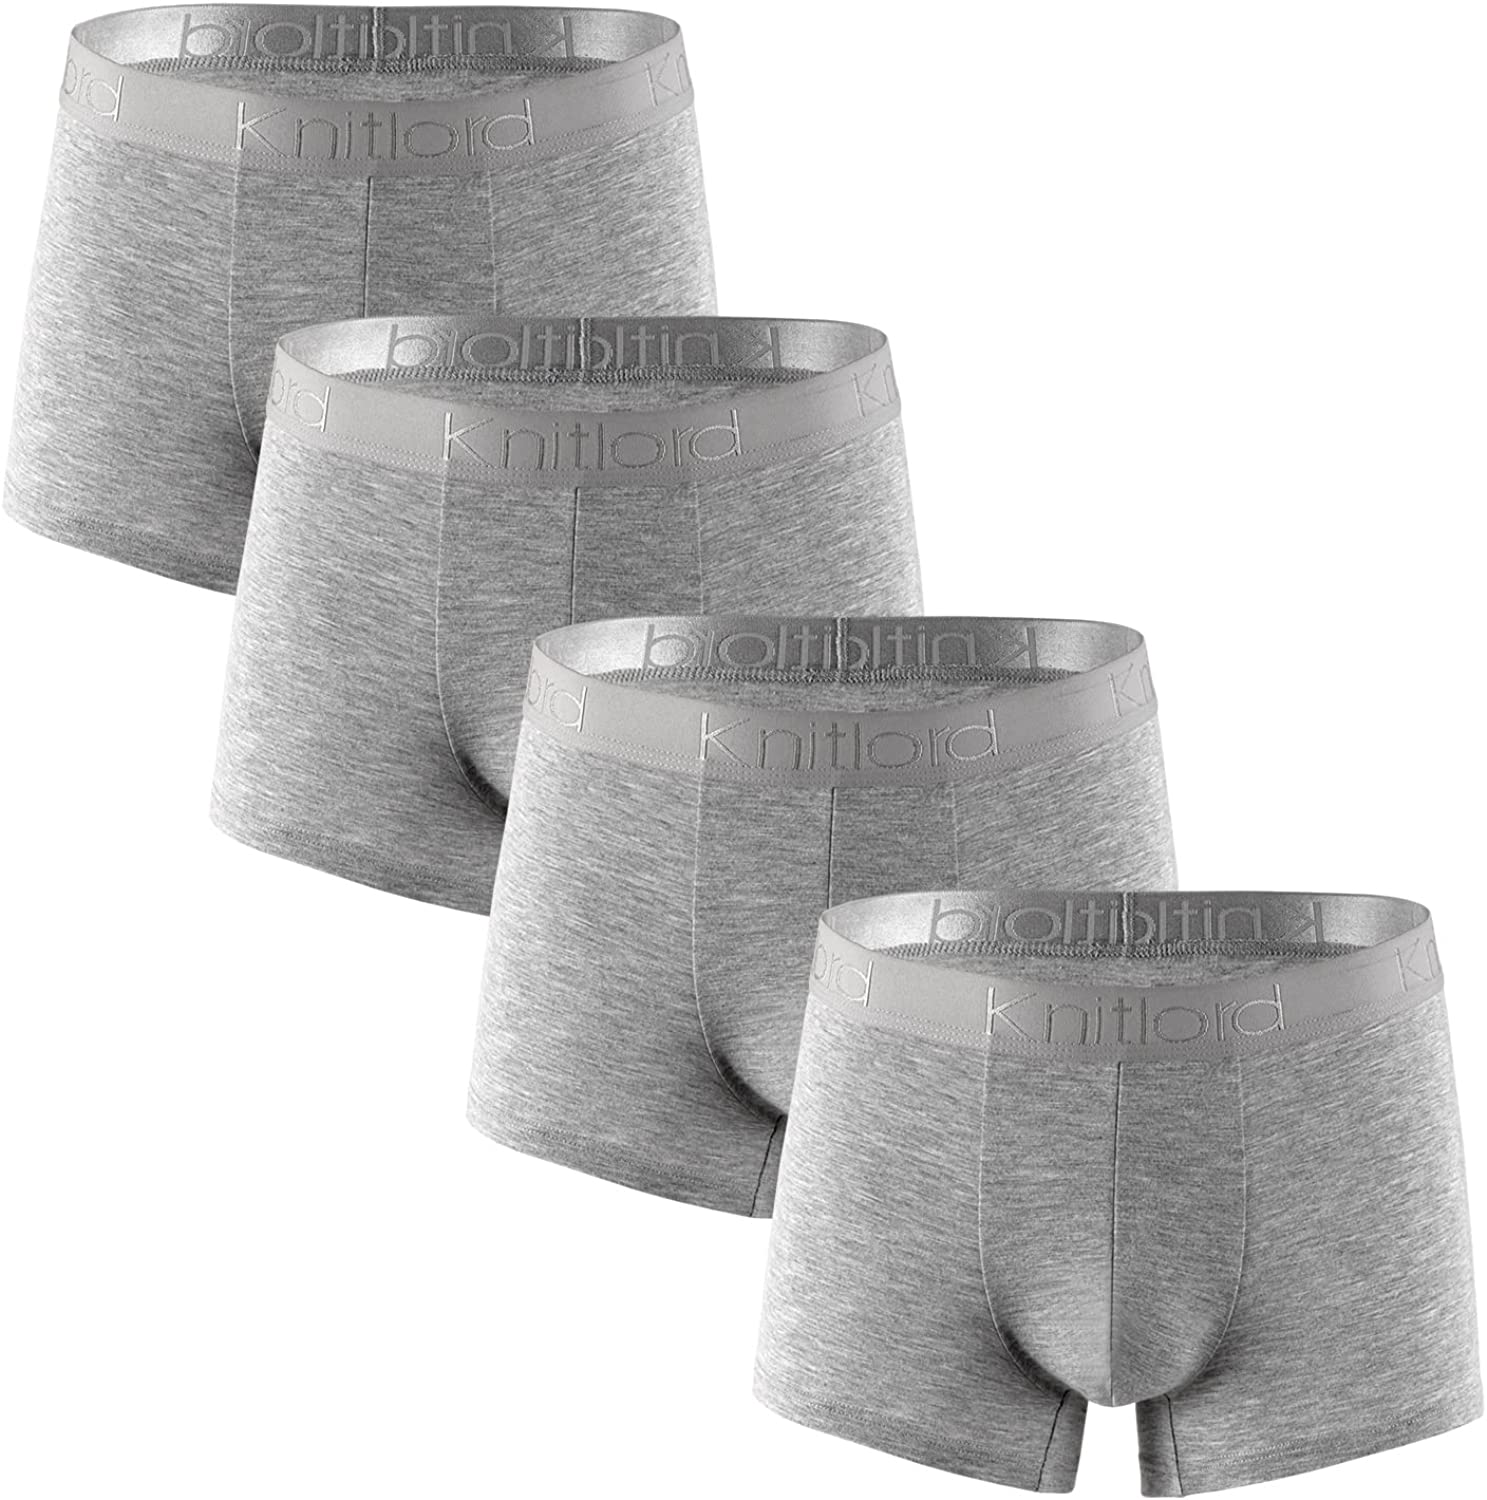 KNITLORD Men's Breathable Underwear Bamboo Boxer Briefs Short Leg